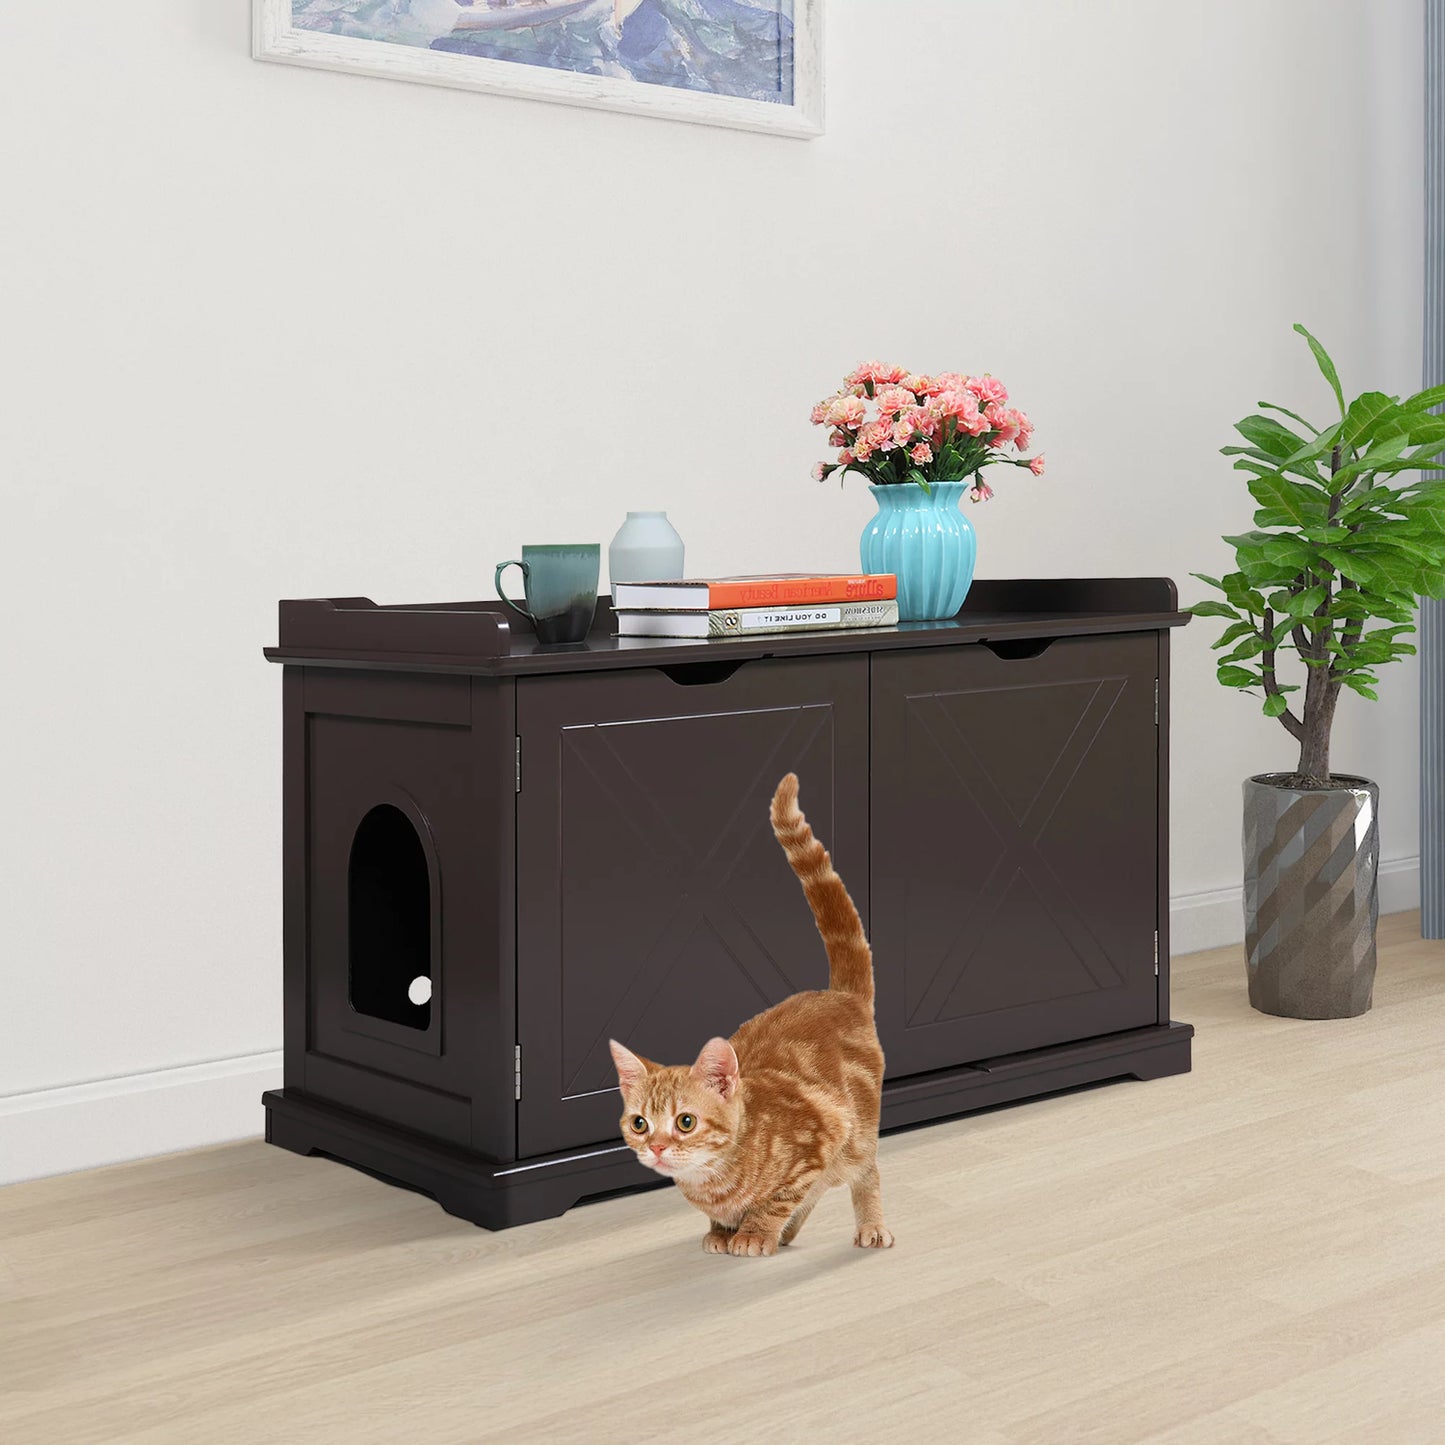 SESSLIFE Cat Hidden Litter Box, 2 in 1 Cat House Furniture and Side Table, 30" Large Litter Box Enclosure, Rustic Brown, TE2166